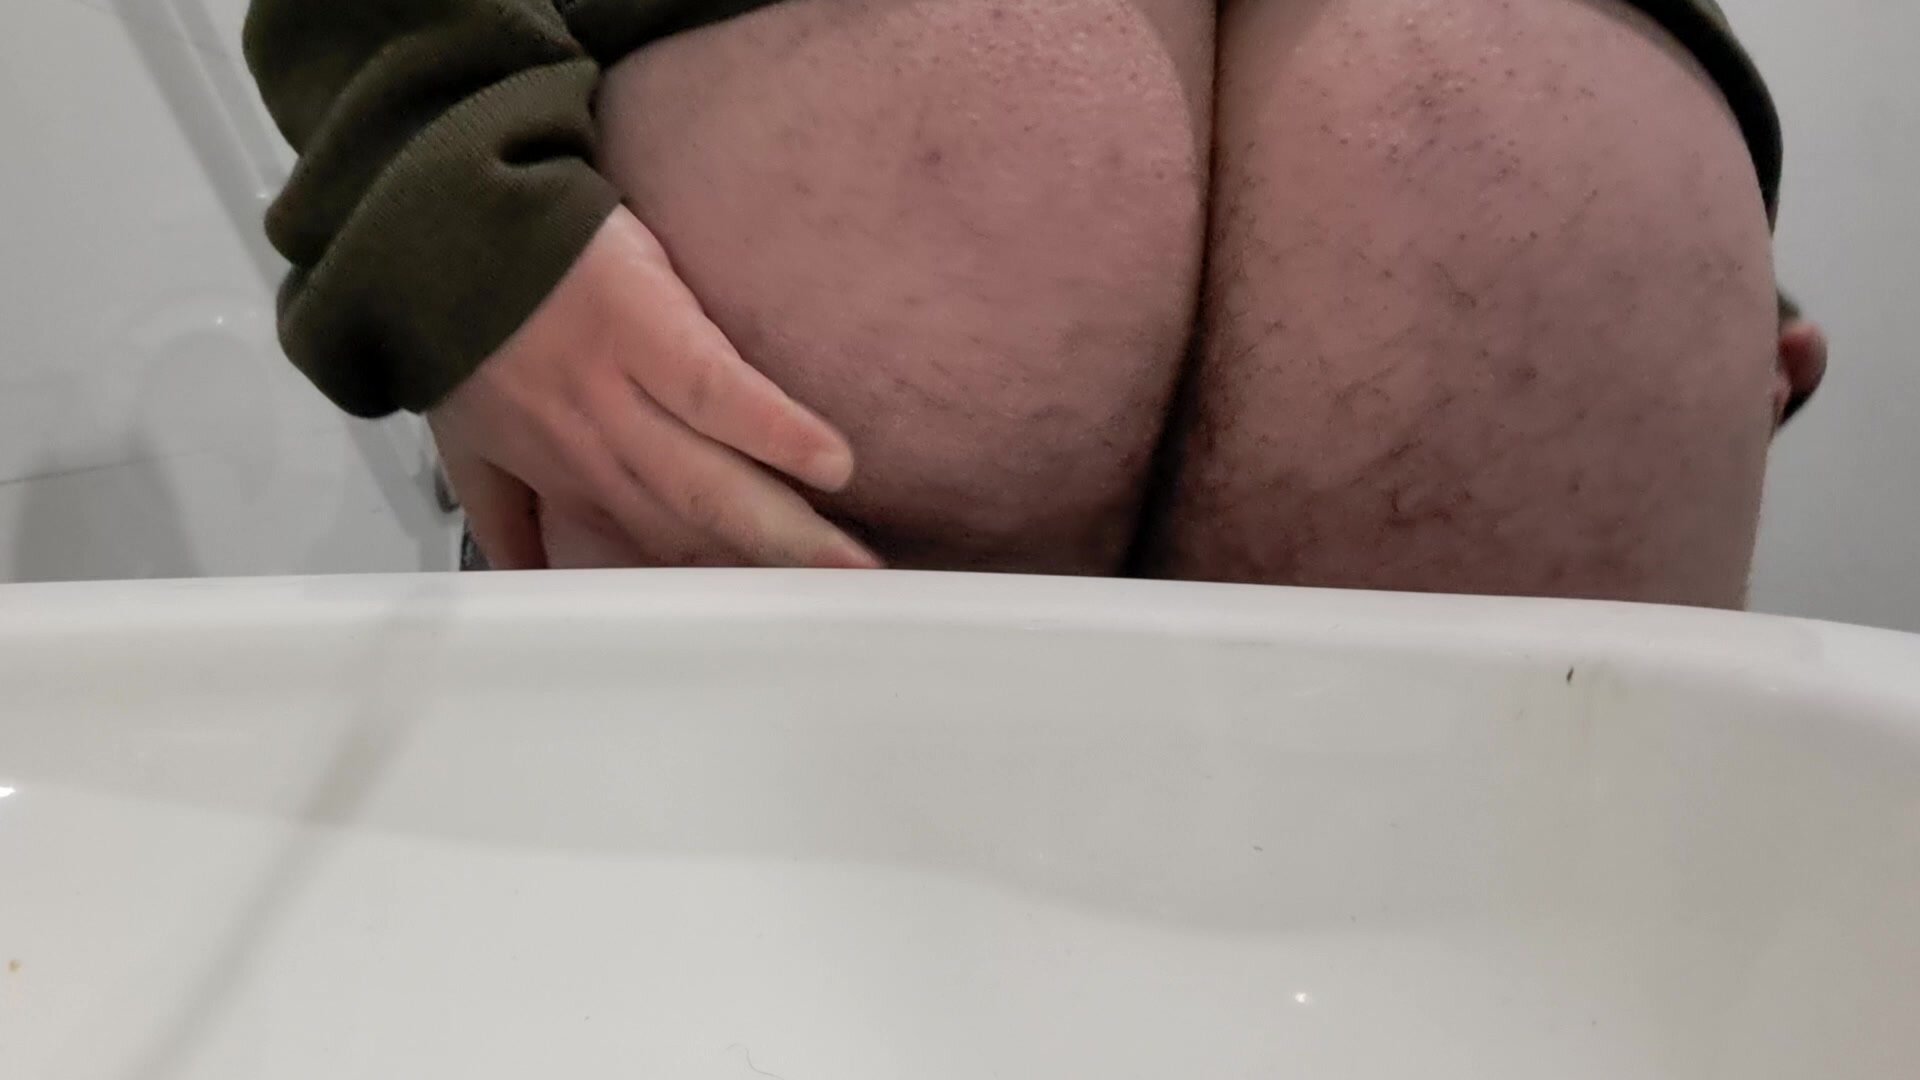 Soft serve shit in public bathroom sink